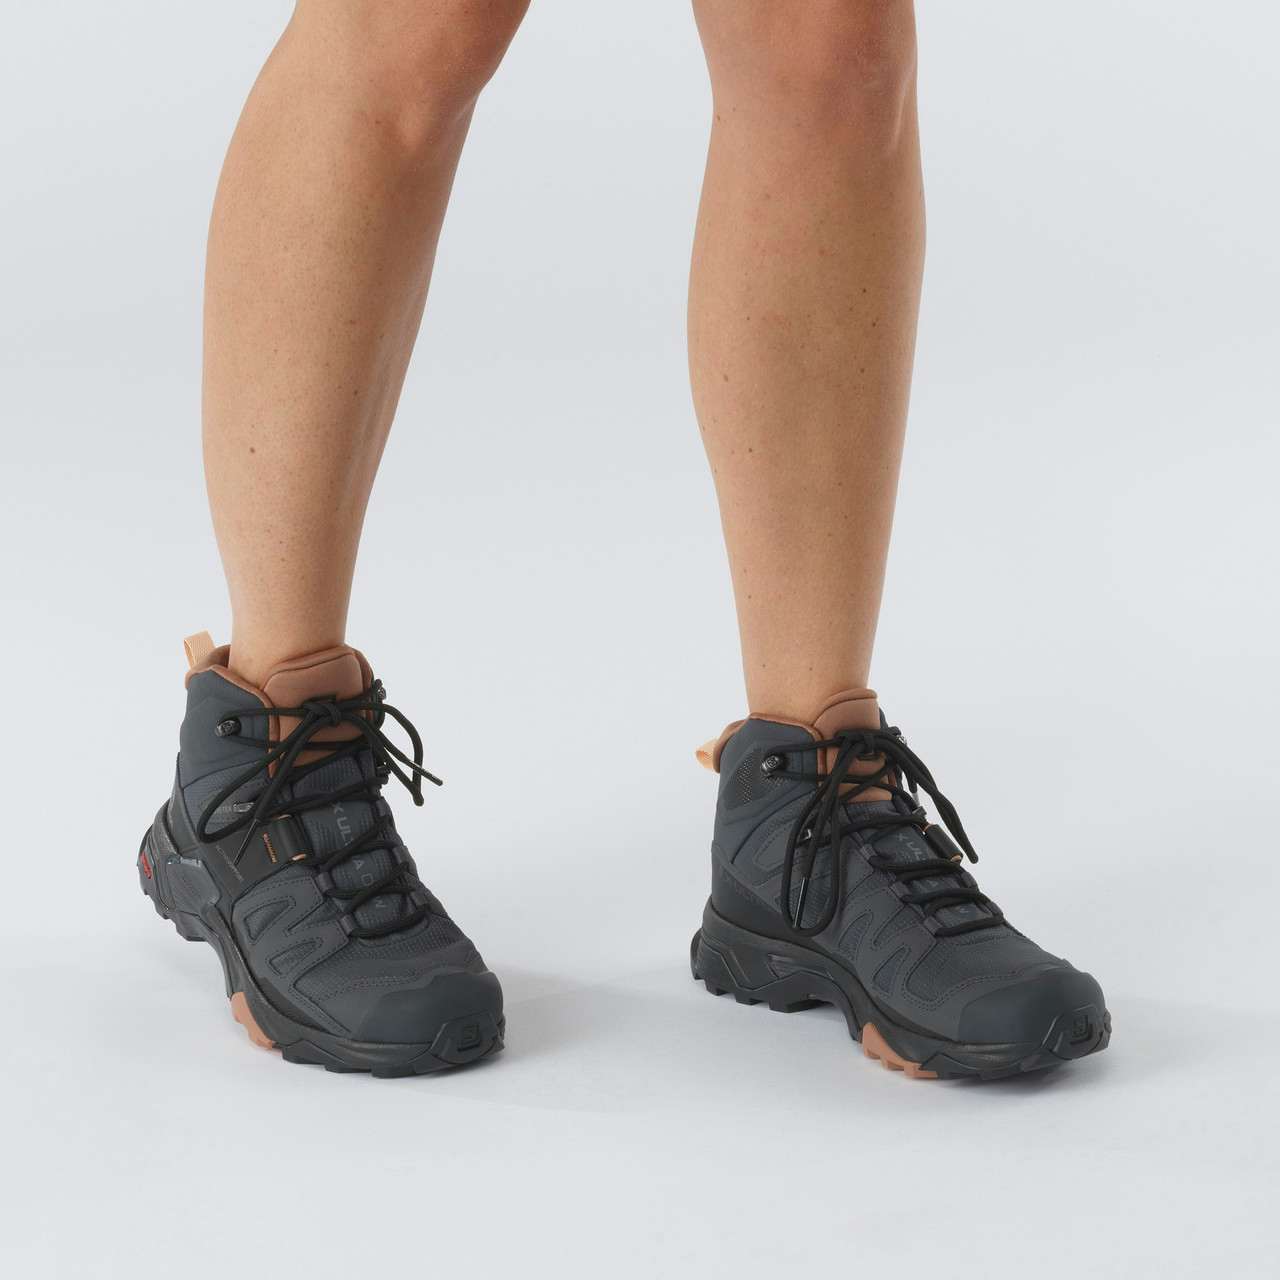 Chaussures de courte randonnée X Ultra Mid 4 X GTX Ébène/moka/amande